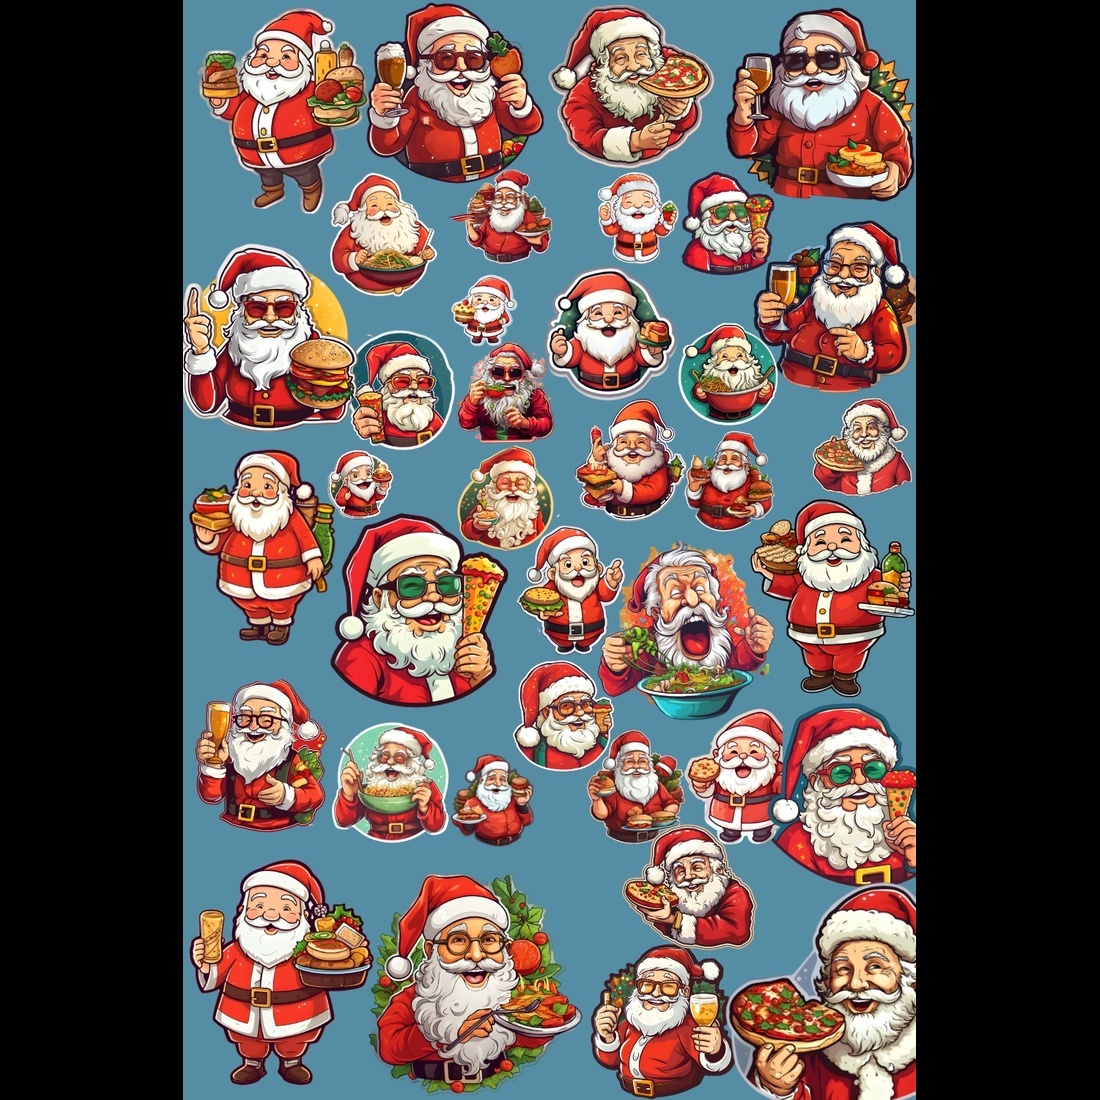 Foodie Santa sticker bundle preview image.